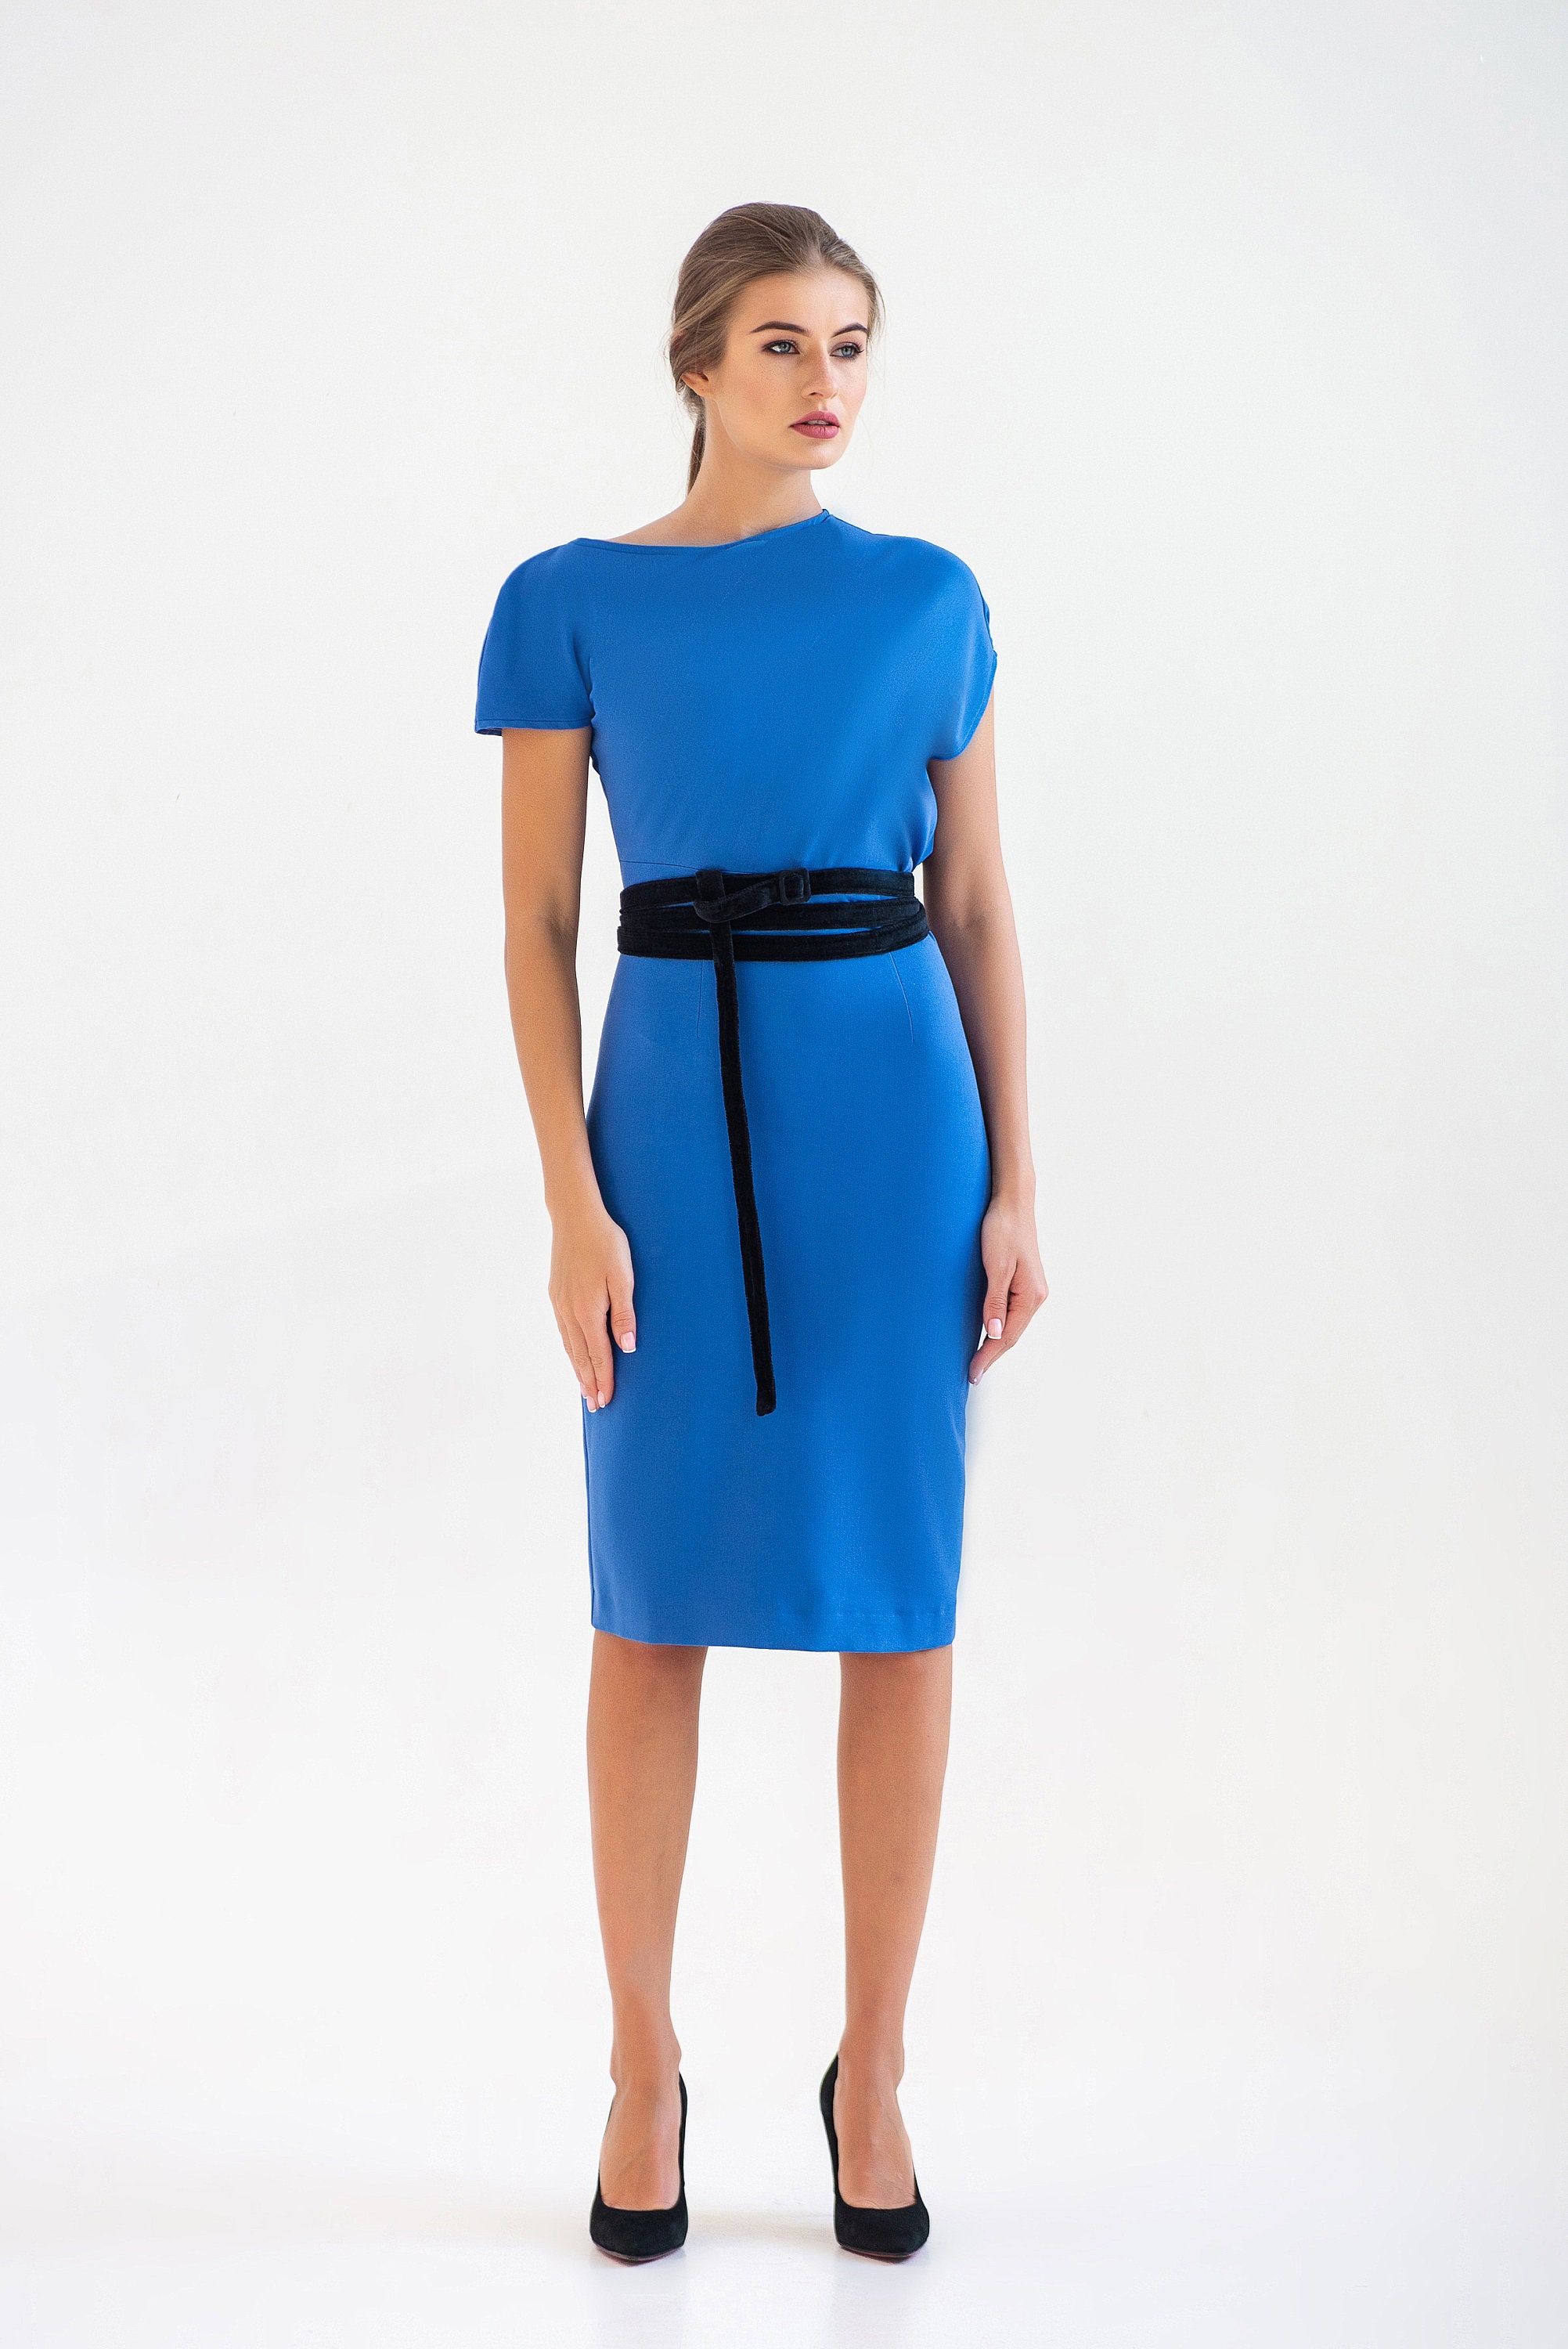 Asymmetrical Designer Blouson Pencil Dress Cobalt Blue Midi - Etsy